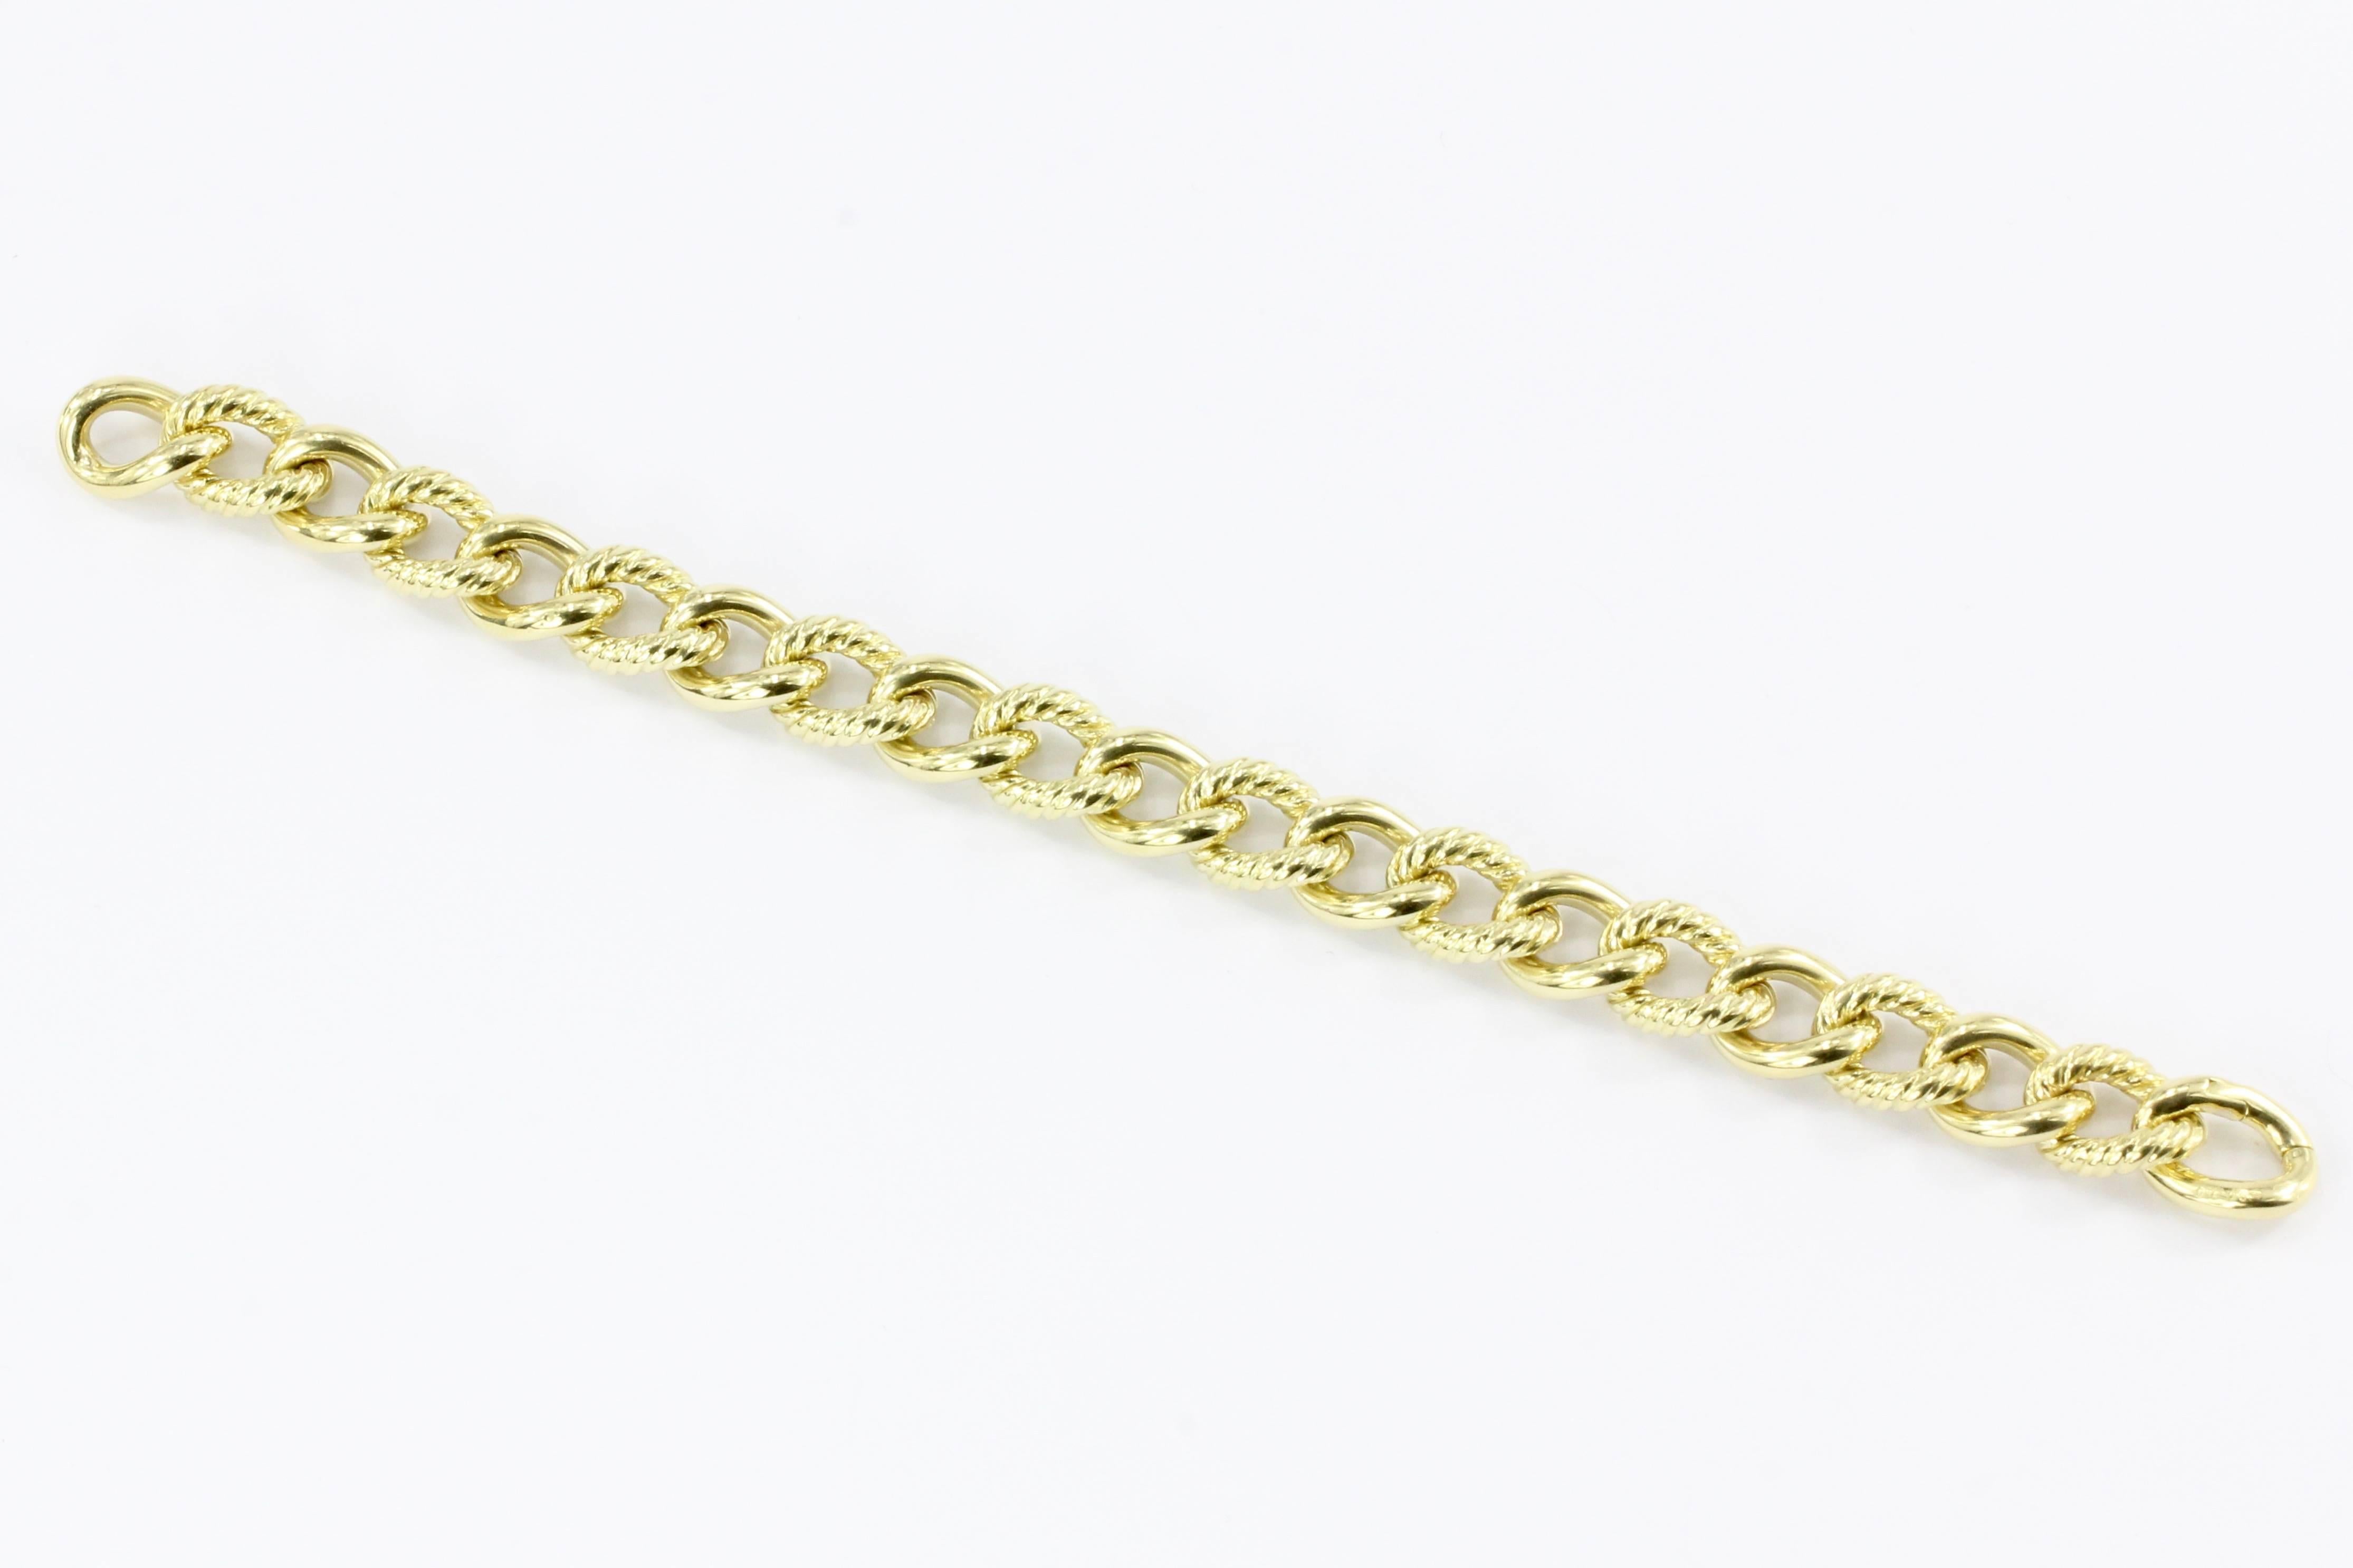 Era: Modern

Hallmarks: 750

Makers Mark: DY

Composition: 18K Yellow Gold 

Bracelet length: 7.5